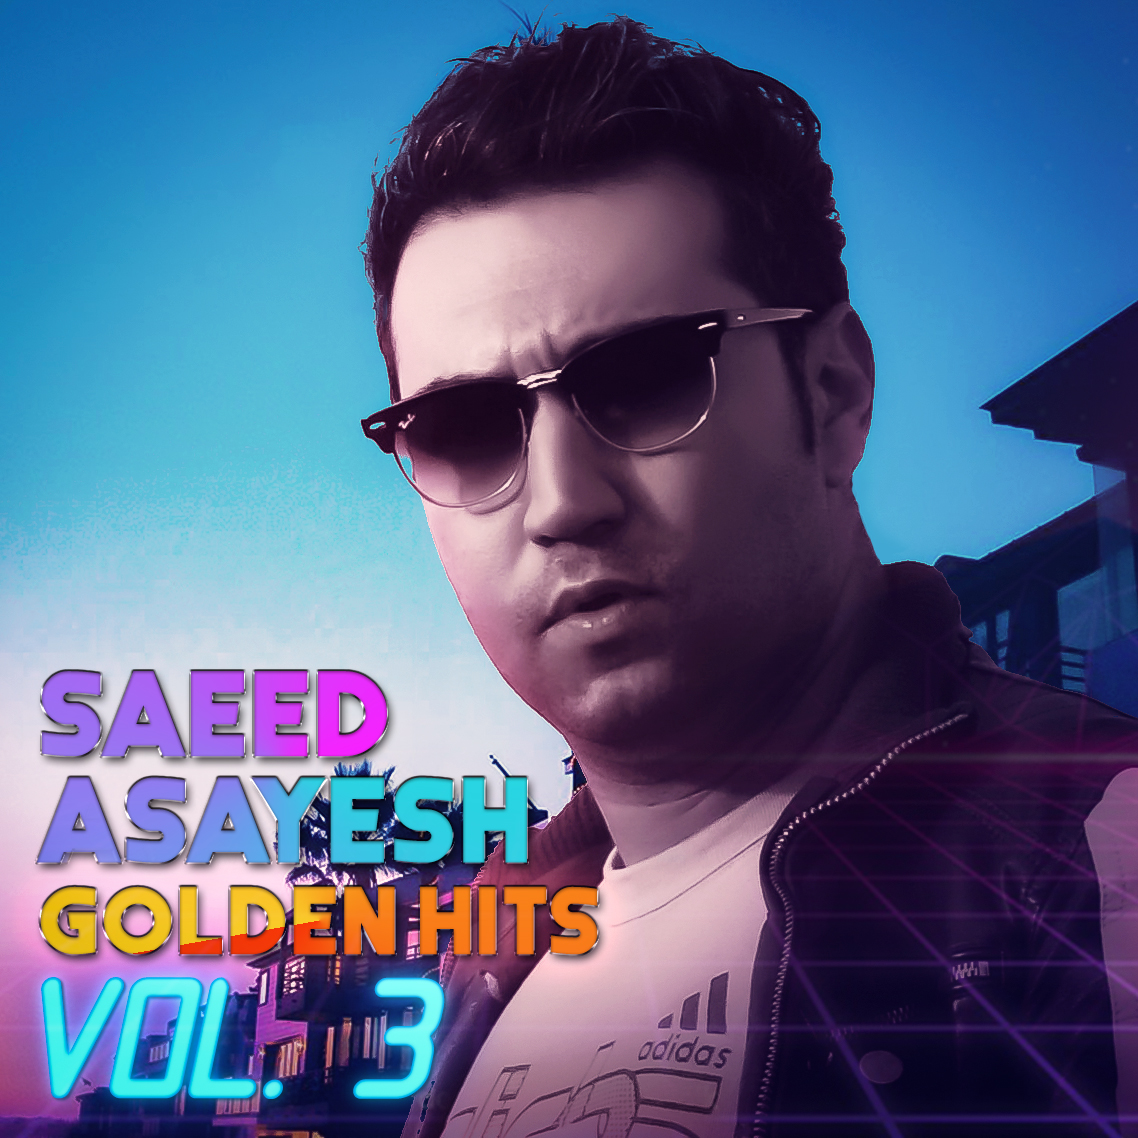  دانلود آهنگ جدید سعید آسایش - نمره عاشقی | Download New Music By Saeed Asayesh - Nomreye Asheghi